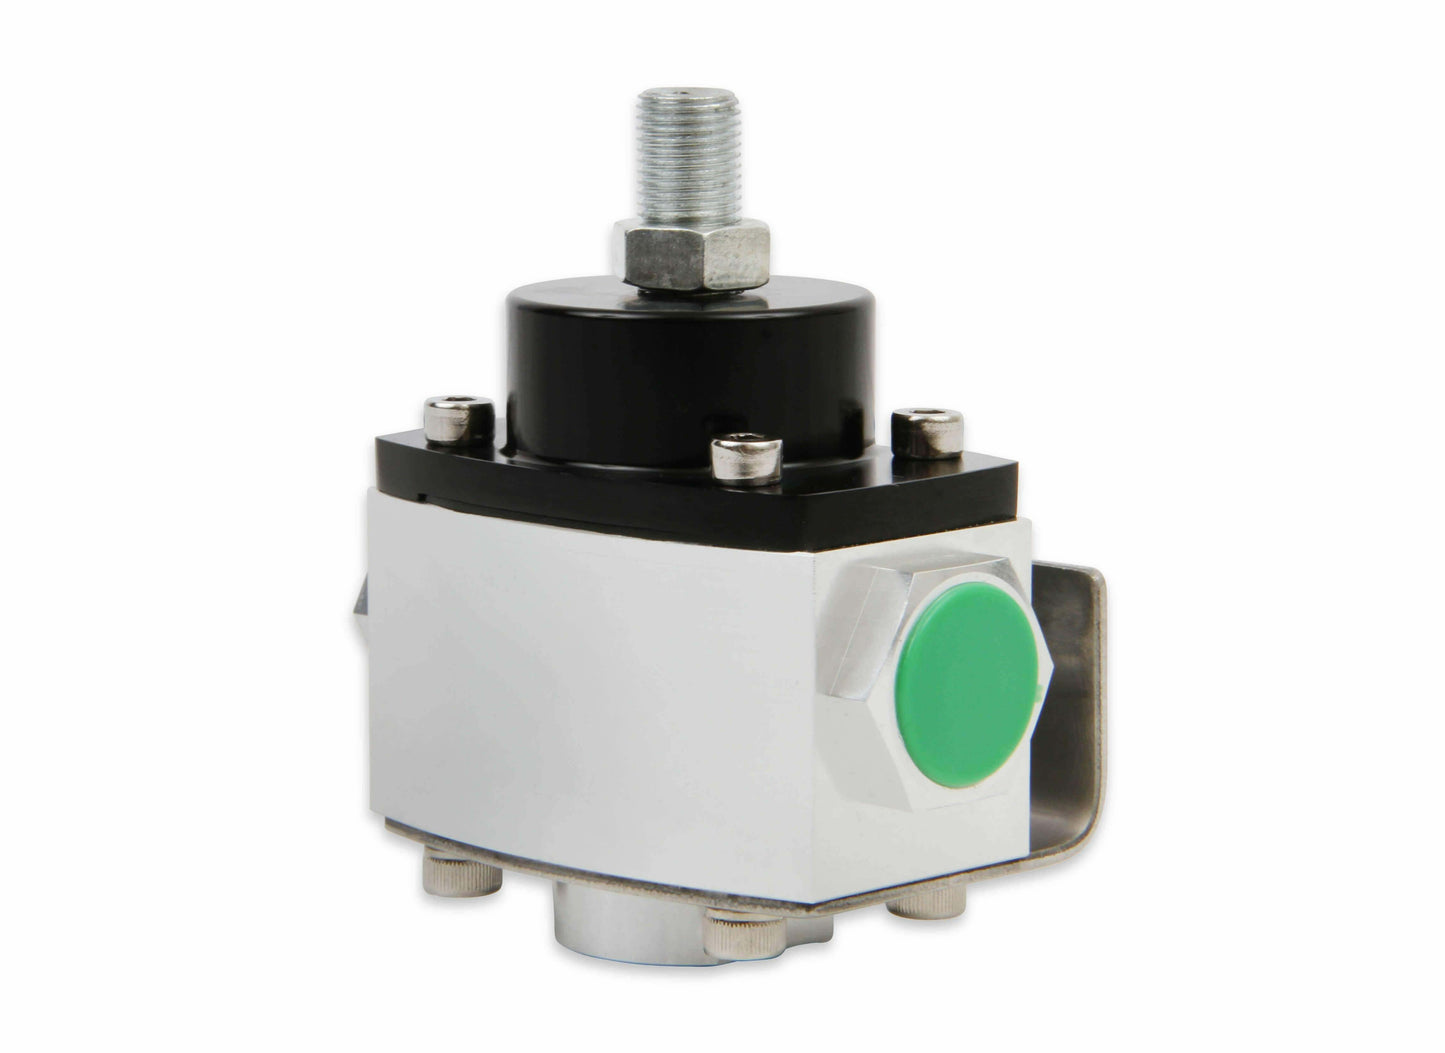 Mr Gasket 2015 Fuel Pressure Regulator Fuel Pressure Range is 4.5 – 9 PSI